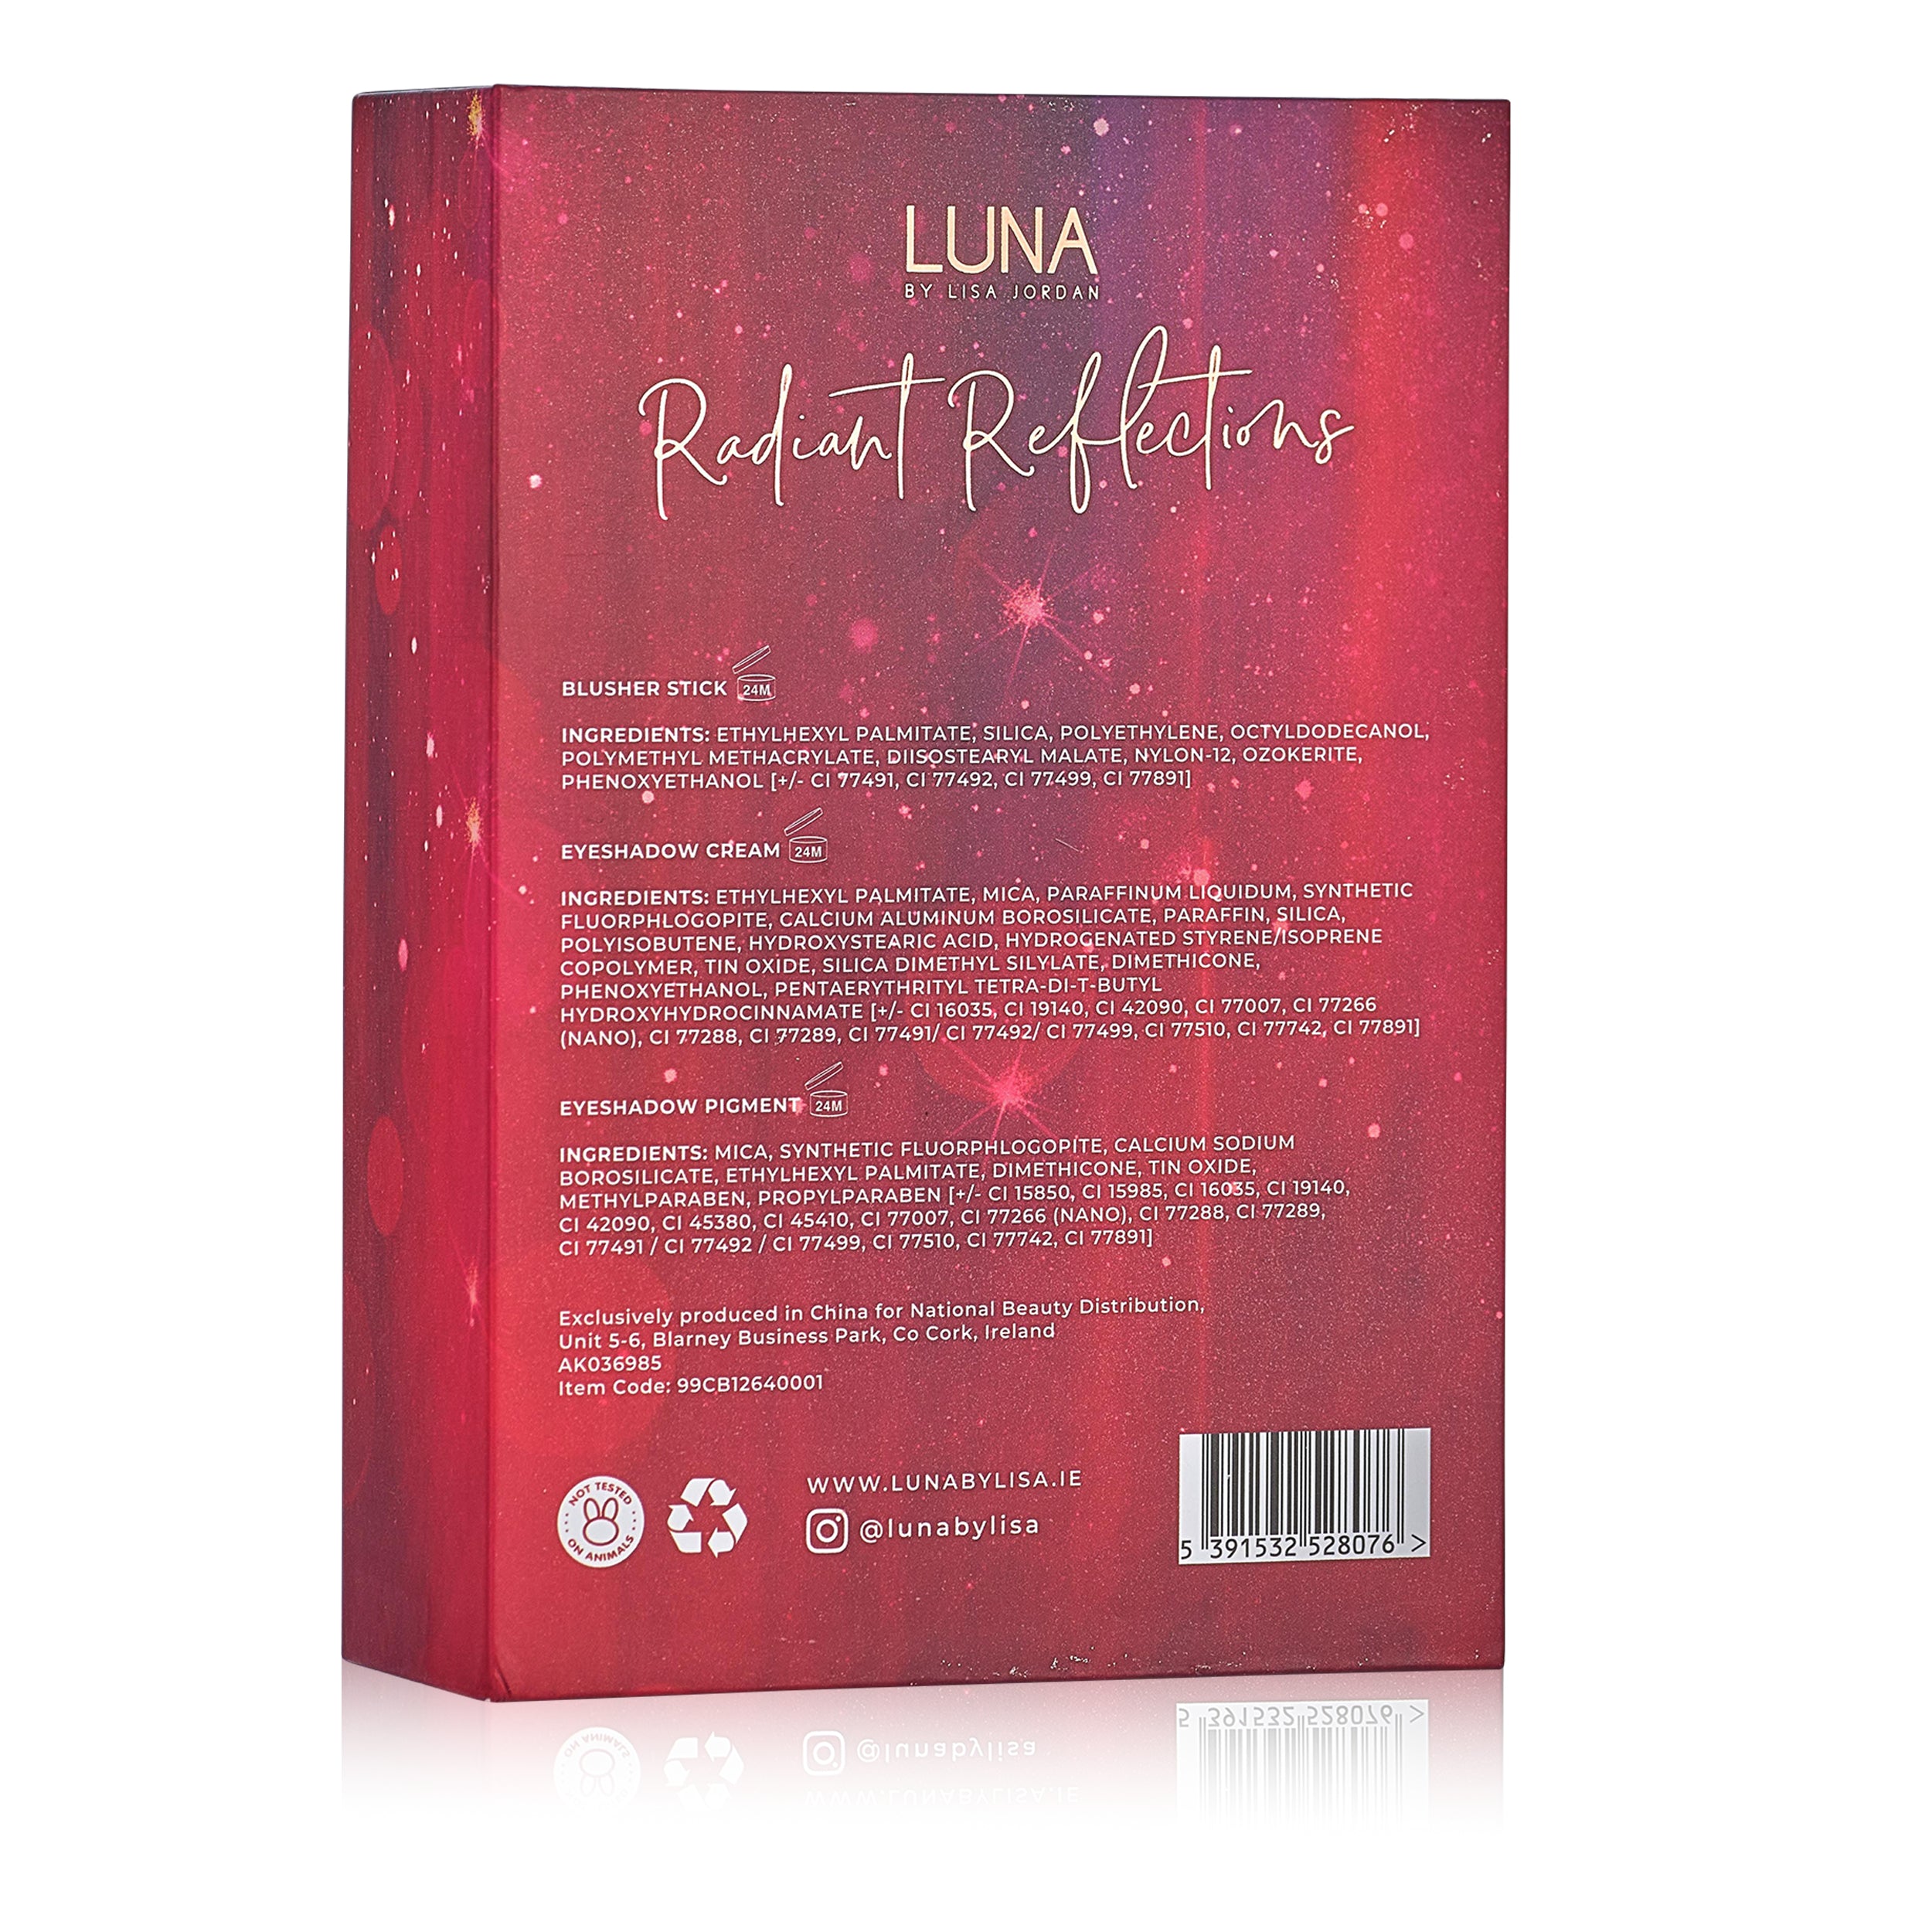 LUNA by Lisa Christmas set 2023 Radiant Reflections